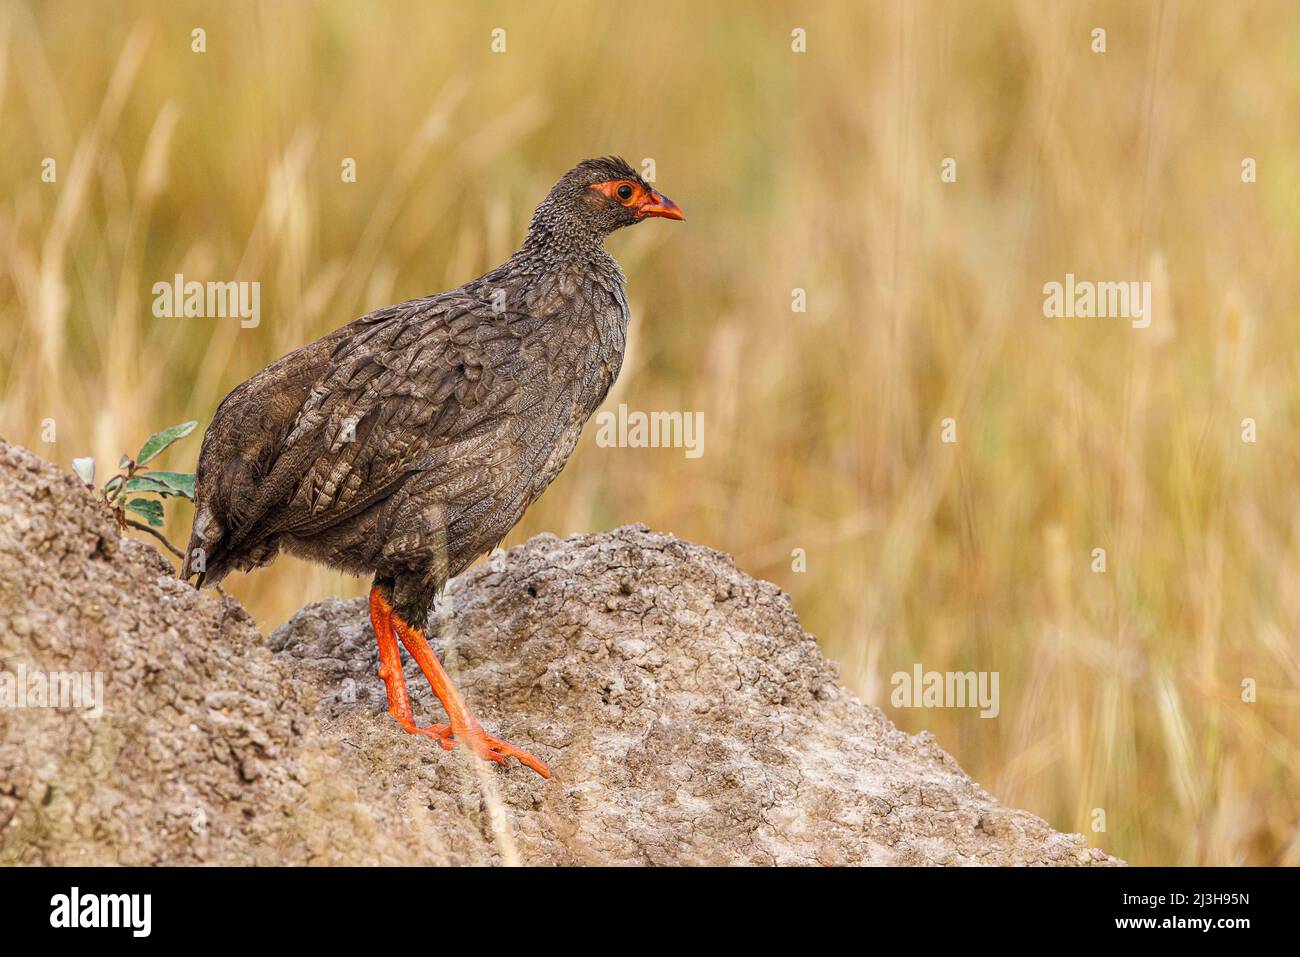 Uganda, Rubirizi district, Katunguru, Queen Elizabeth National Park, Red necked spurfowl Stock Photo